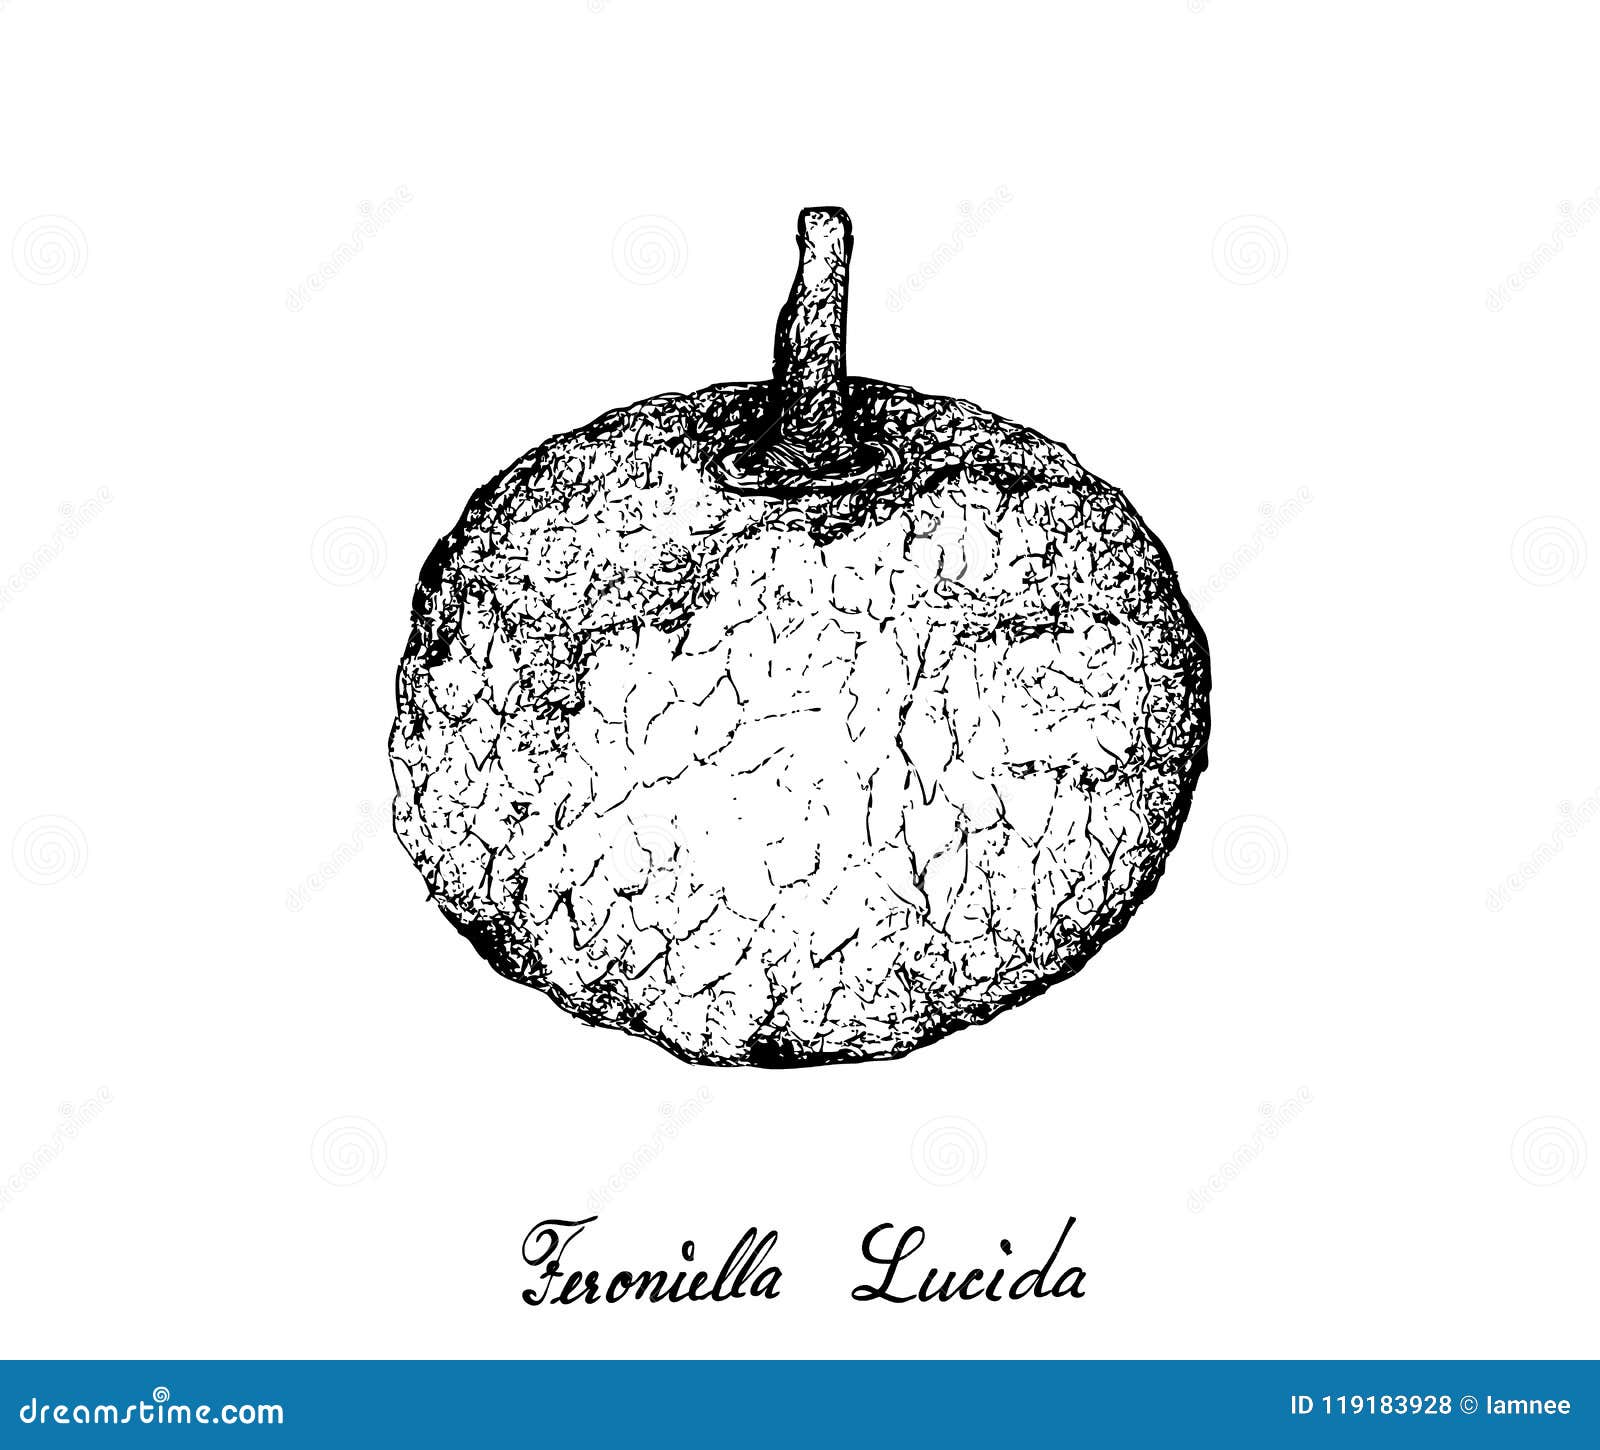 hand drawn of feroniella lucida fruits on white background